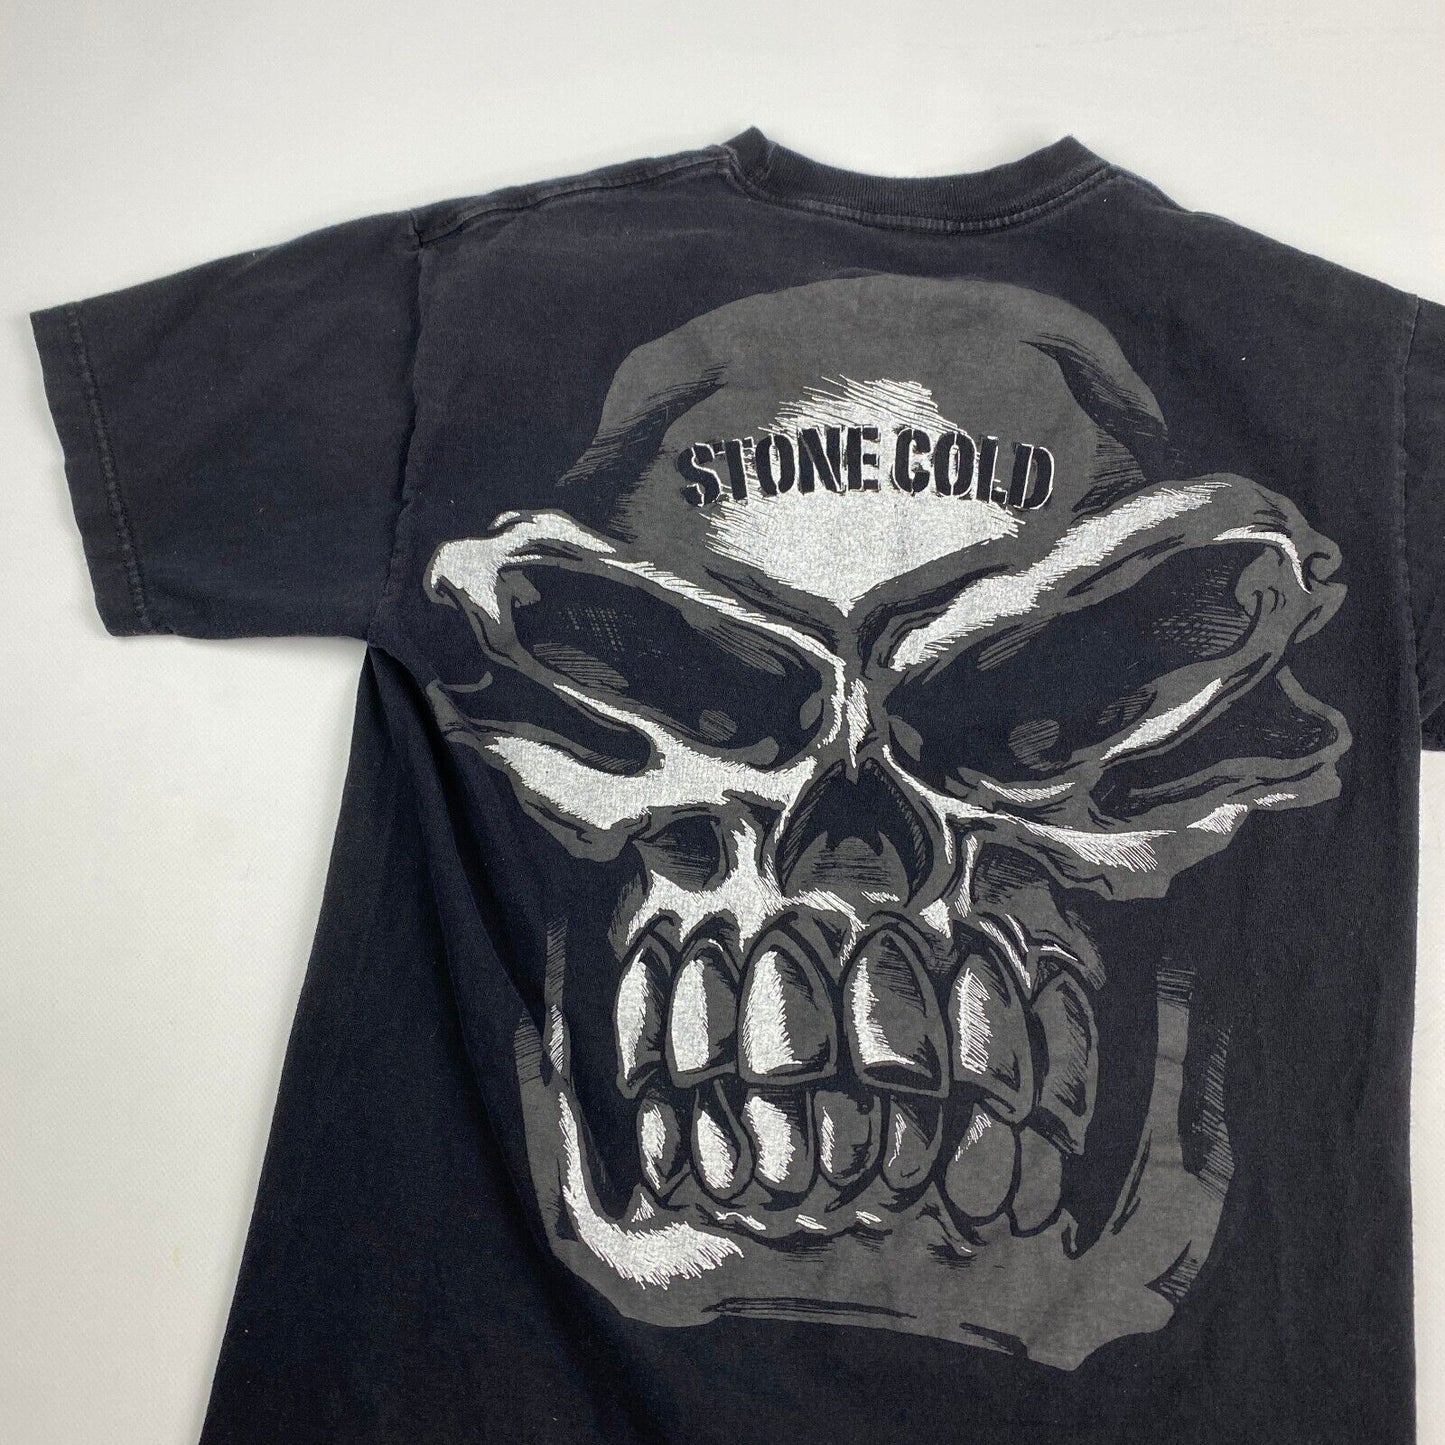 VINTAGE Stone Cold Arrive Raise Hell Leave Wrestling T-Shirt sz Small Men